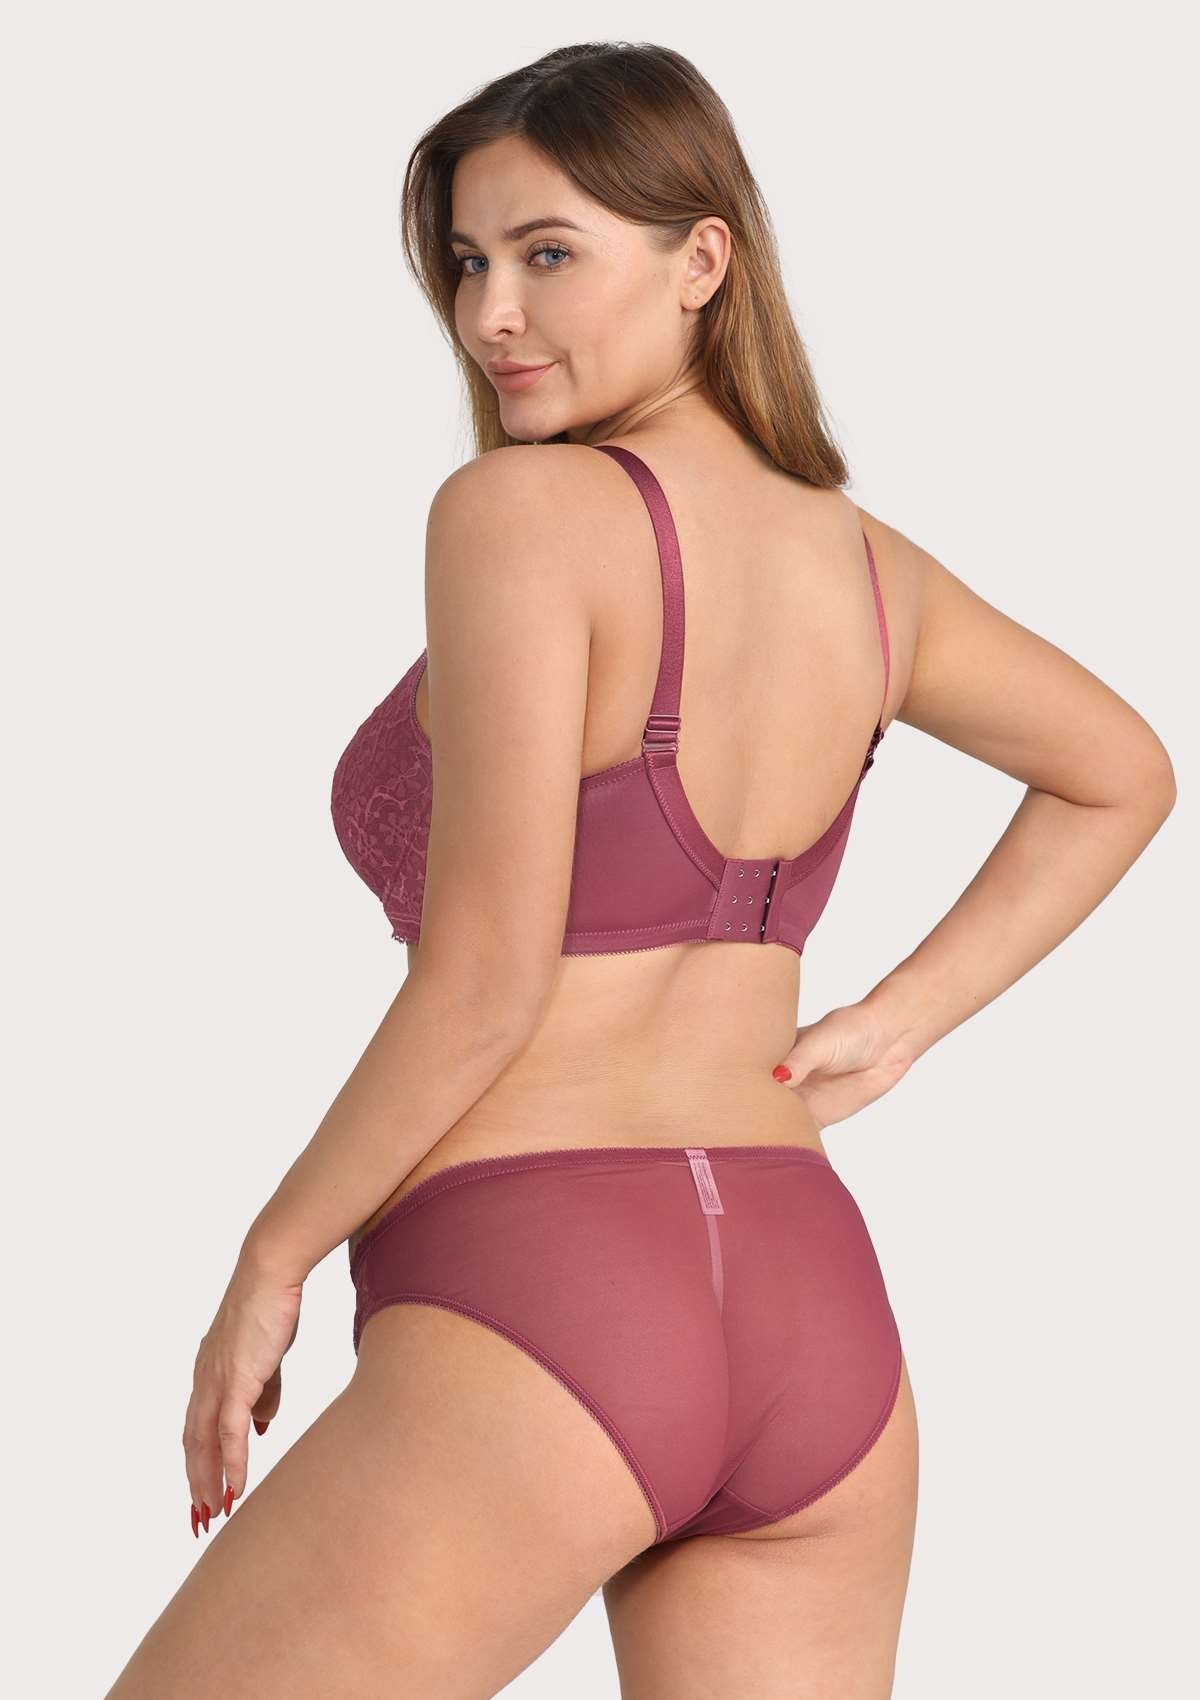 HSIA Anemone Sexy Lace Bra Panty Set: Thick Strap Bra - Burgundy / 34 / C